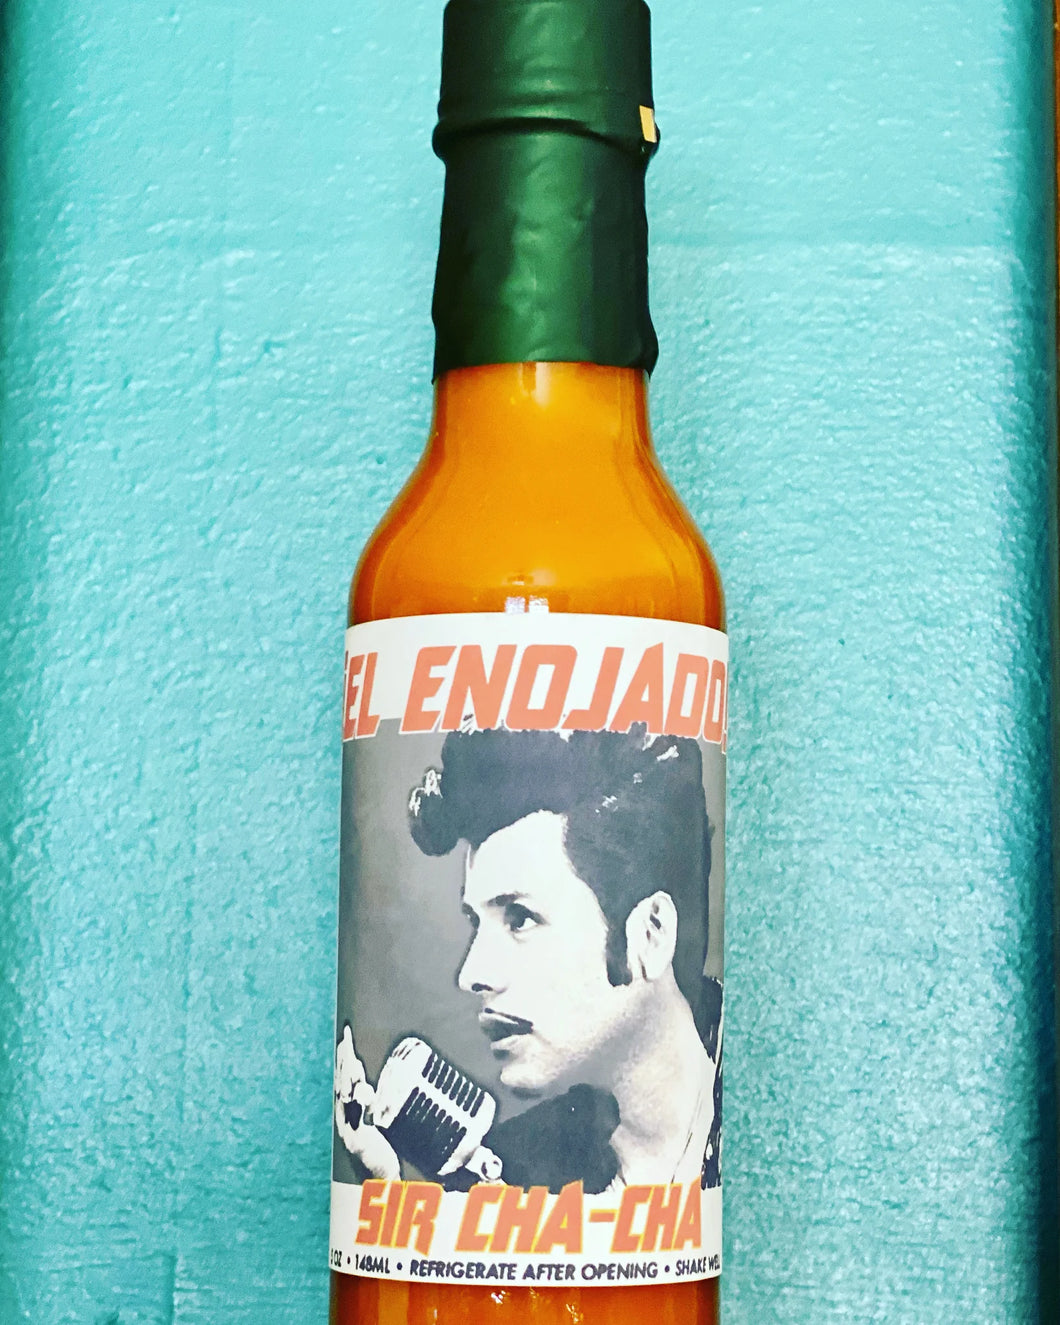 El Enojado Hot Sauce | SIR CHA-CHA!